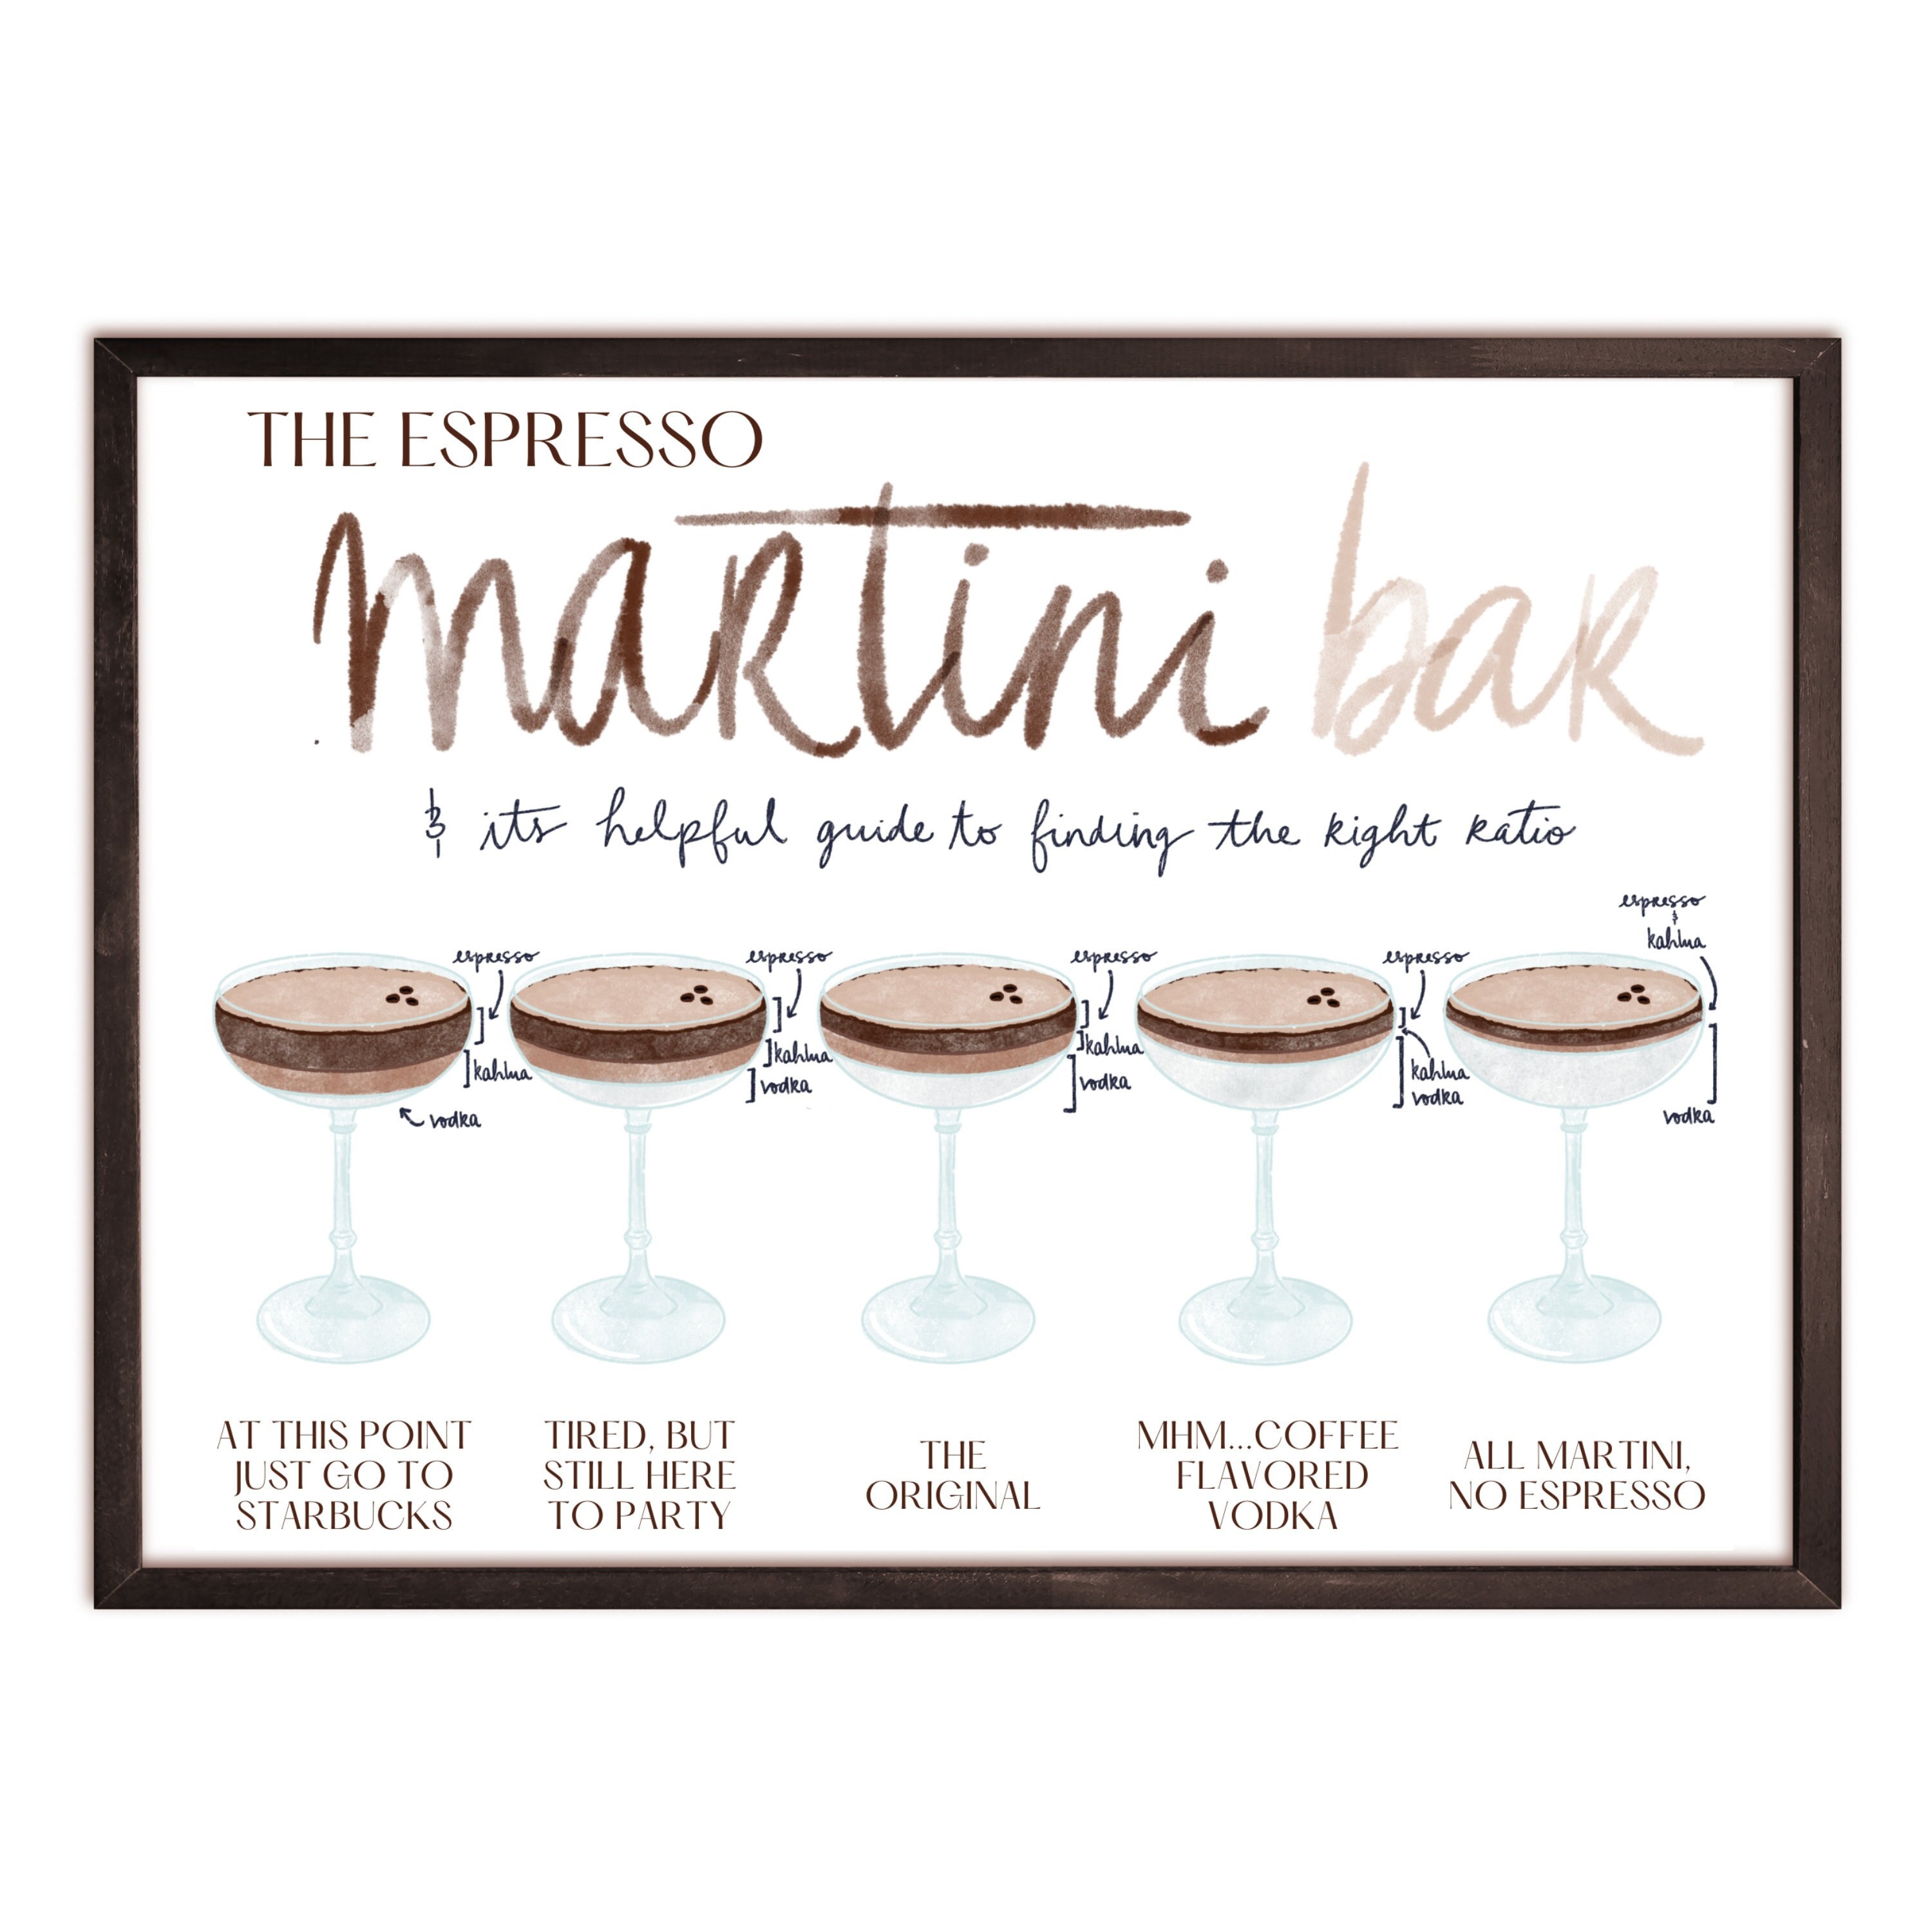 Hand Drawn Colorful Espresso Martini Porto Flip Cocktail Drink Ingredients  Stock Vector by ©mirkakovi 522656798